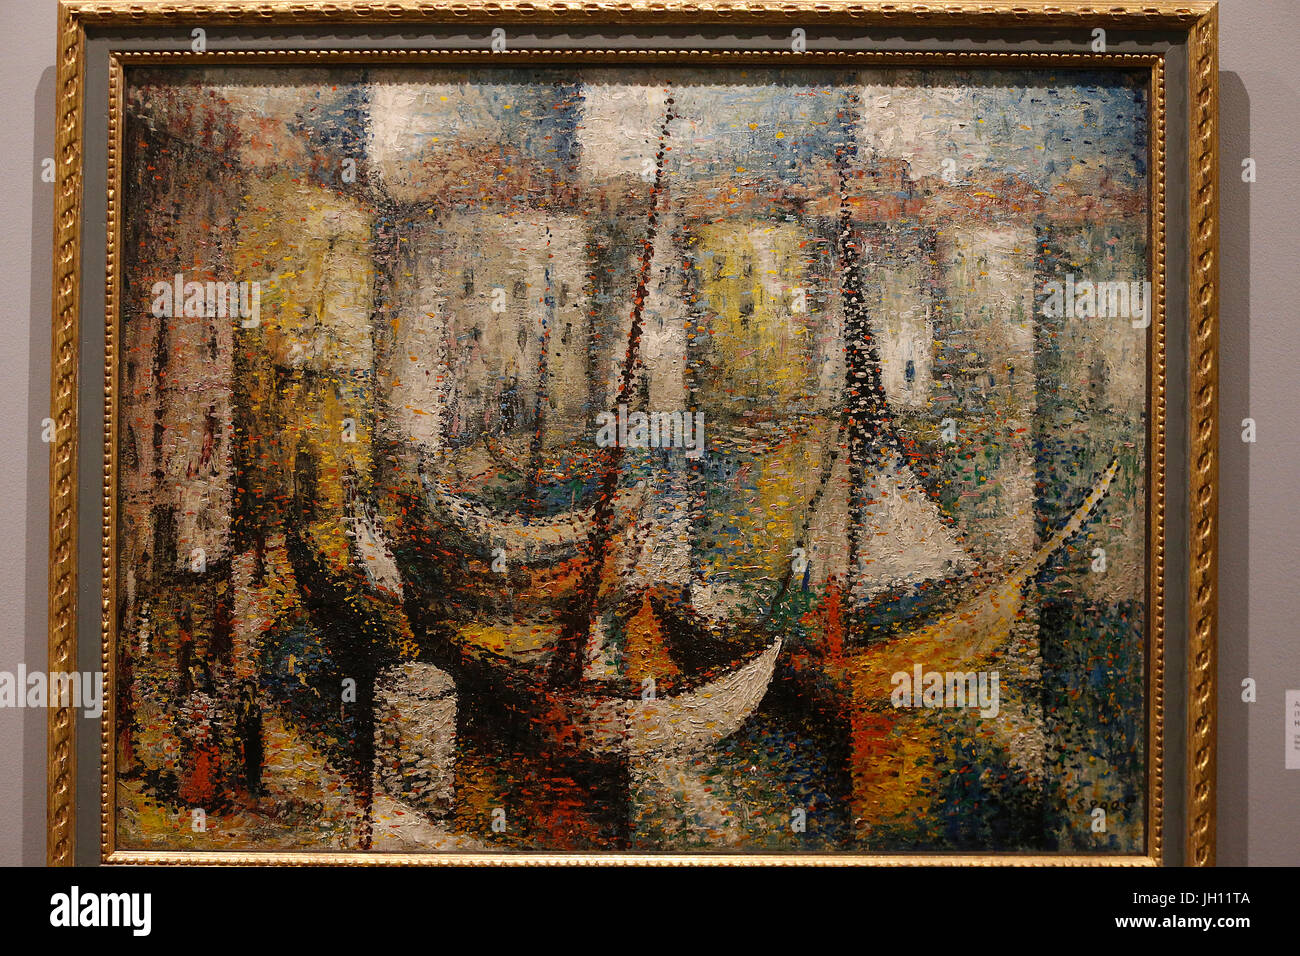 Arthur Segal. Halen, La Ciotat (Hafen-Szene), 1929. Öl auf Leinwand. Ben Uri Sammlung. Vereinigtes Königreich. Stockfoto